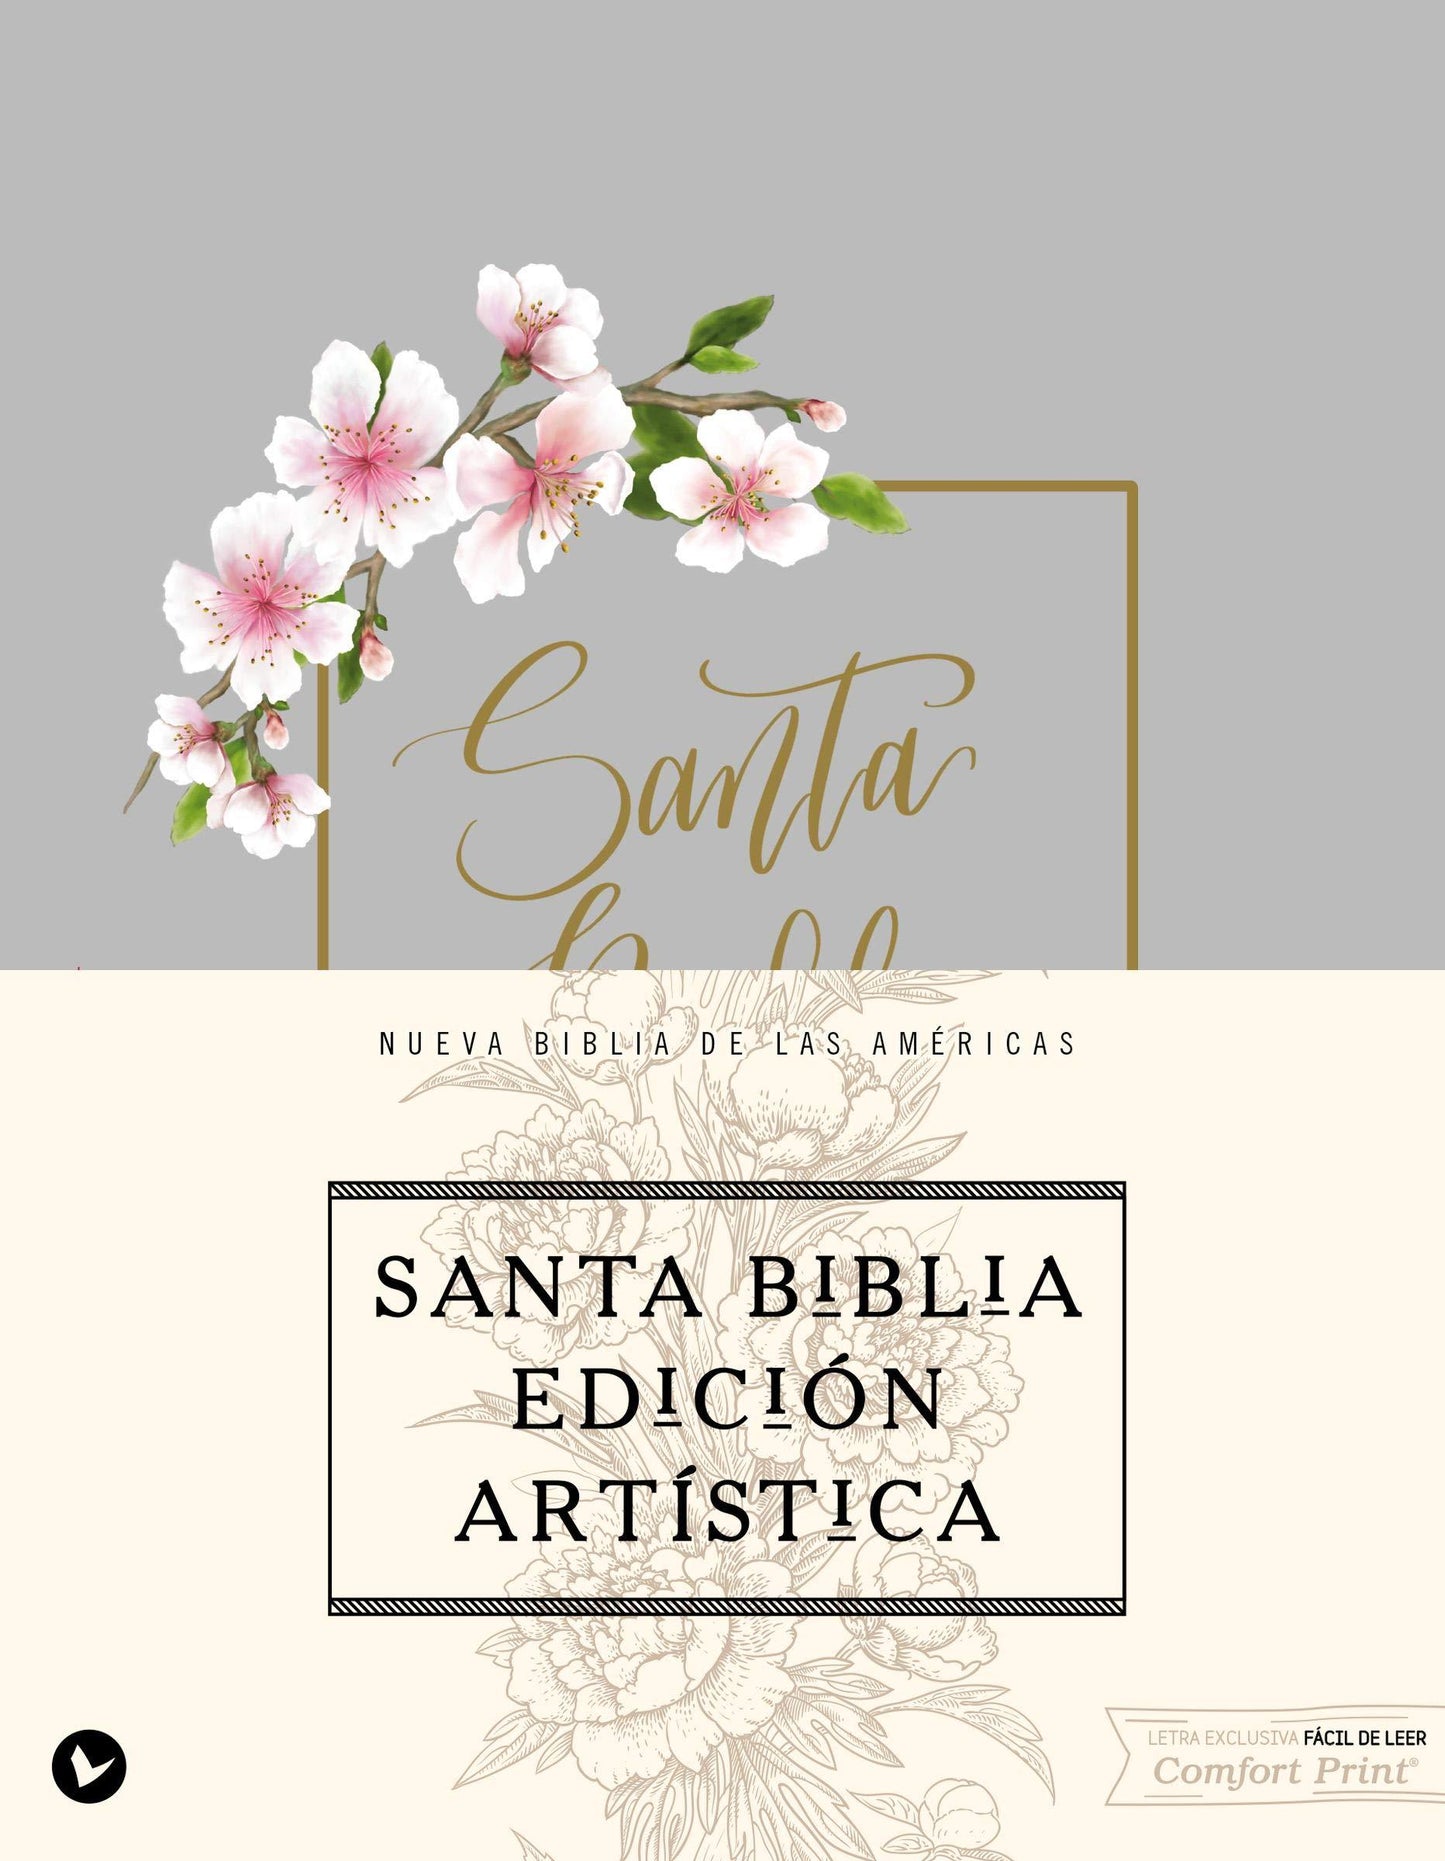 SANTA BIBLIA EDICION ARTISTICA